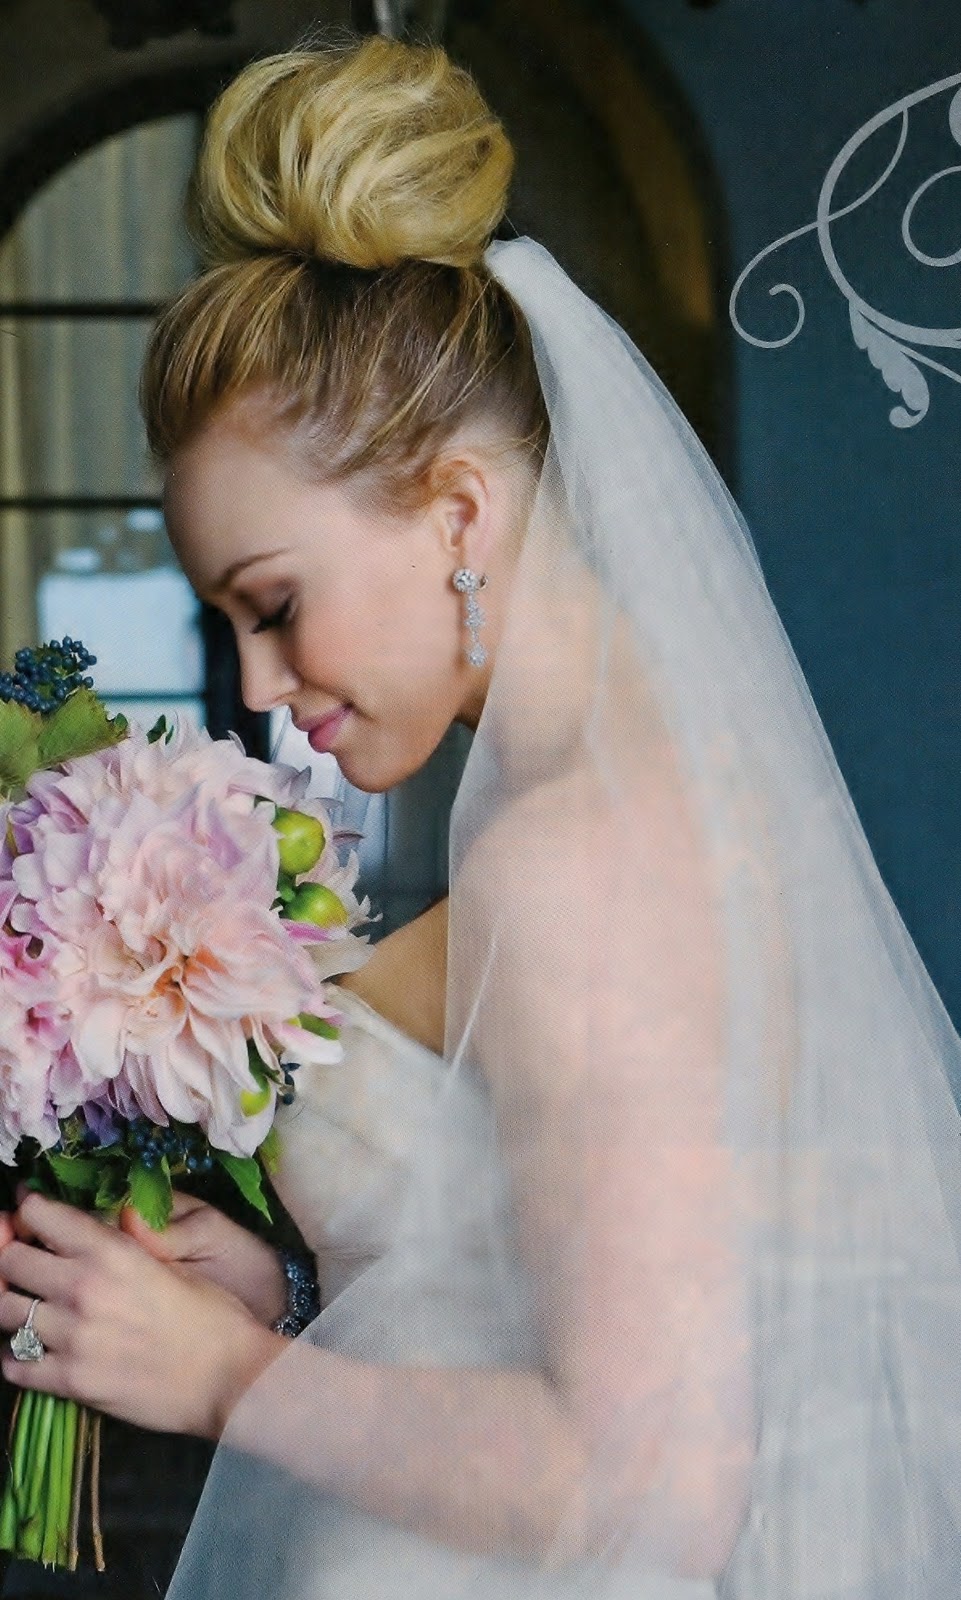 ... Bride: Celebrity Wedding Look Series: 10 Celebrity Wedding Hairstyles